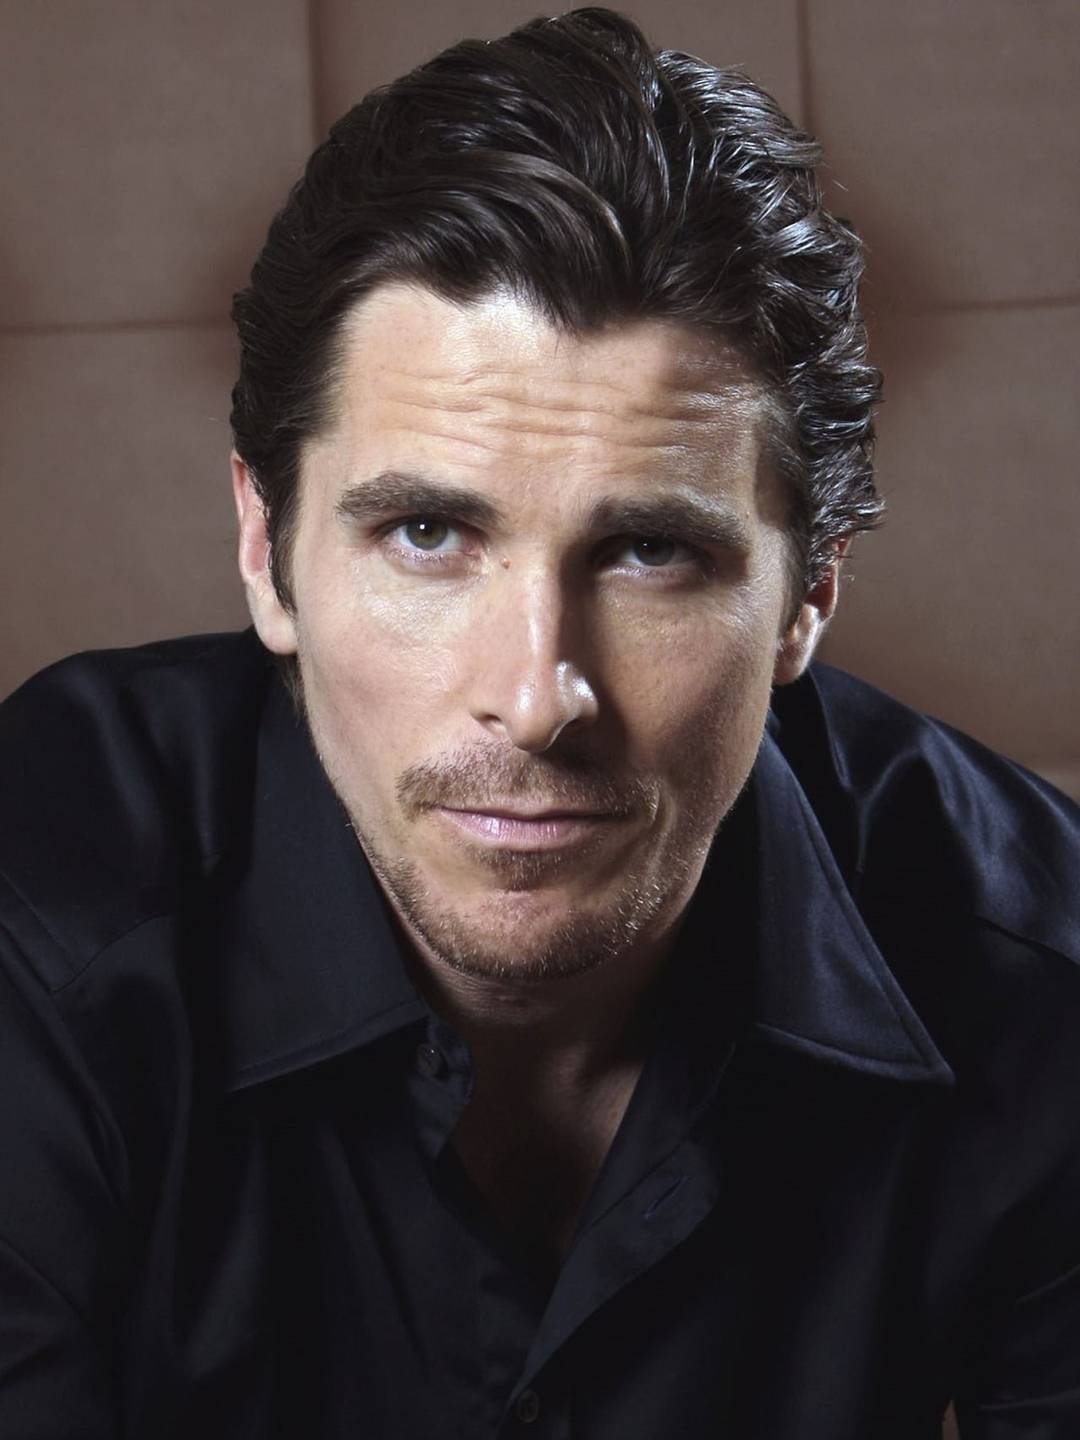 Christian Bale biography